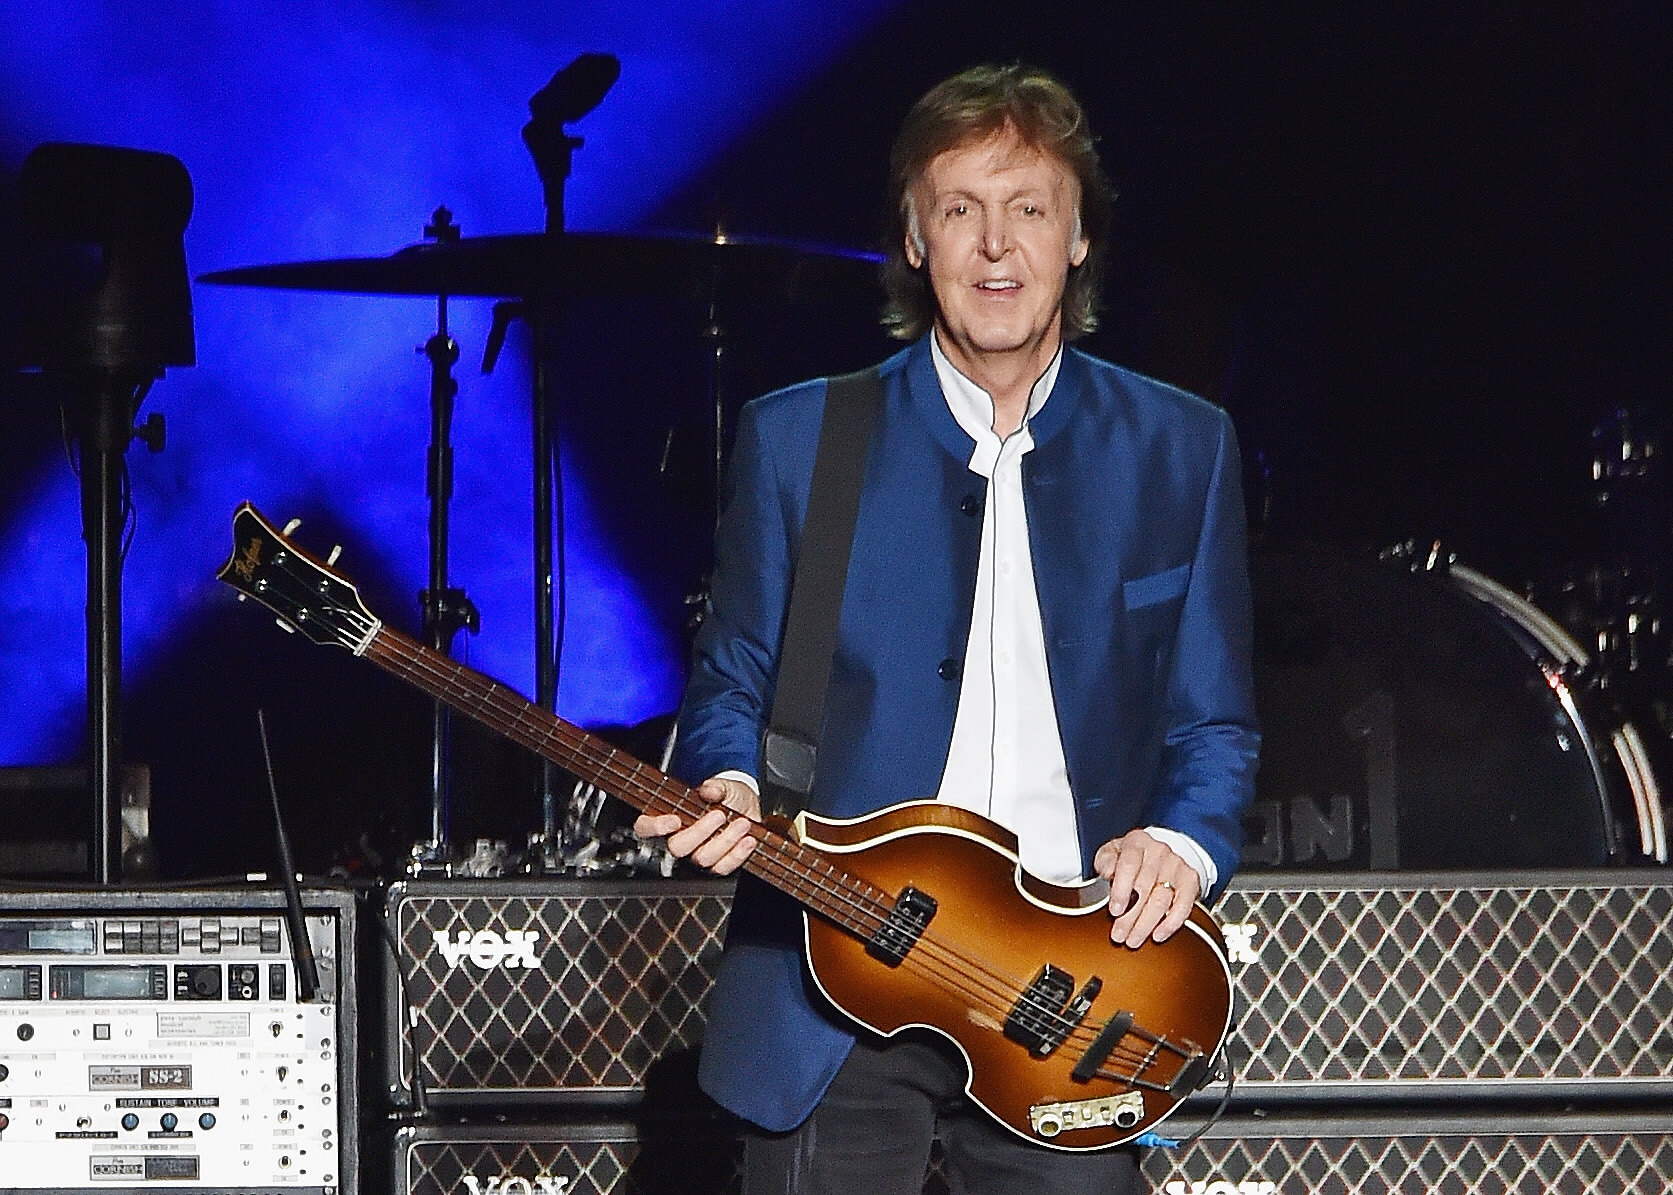 Paul McCartney The Beatles'ın "When I'm Sixty-Four" Sözünün Şaka Olduğunu Söyledi